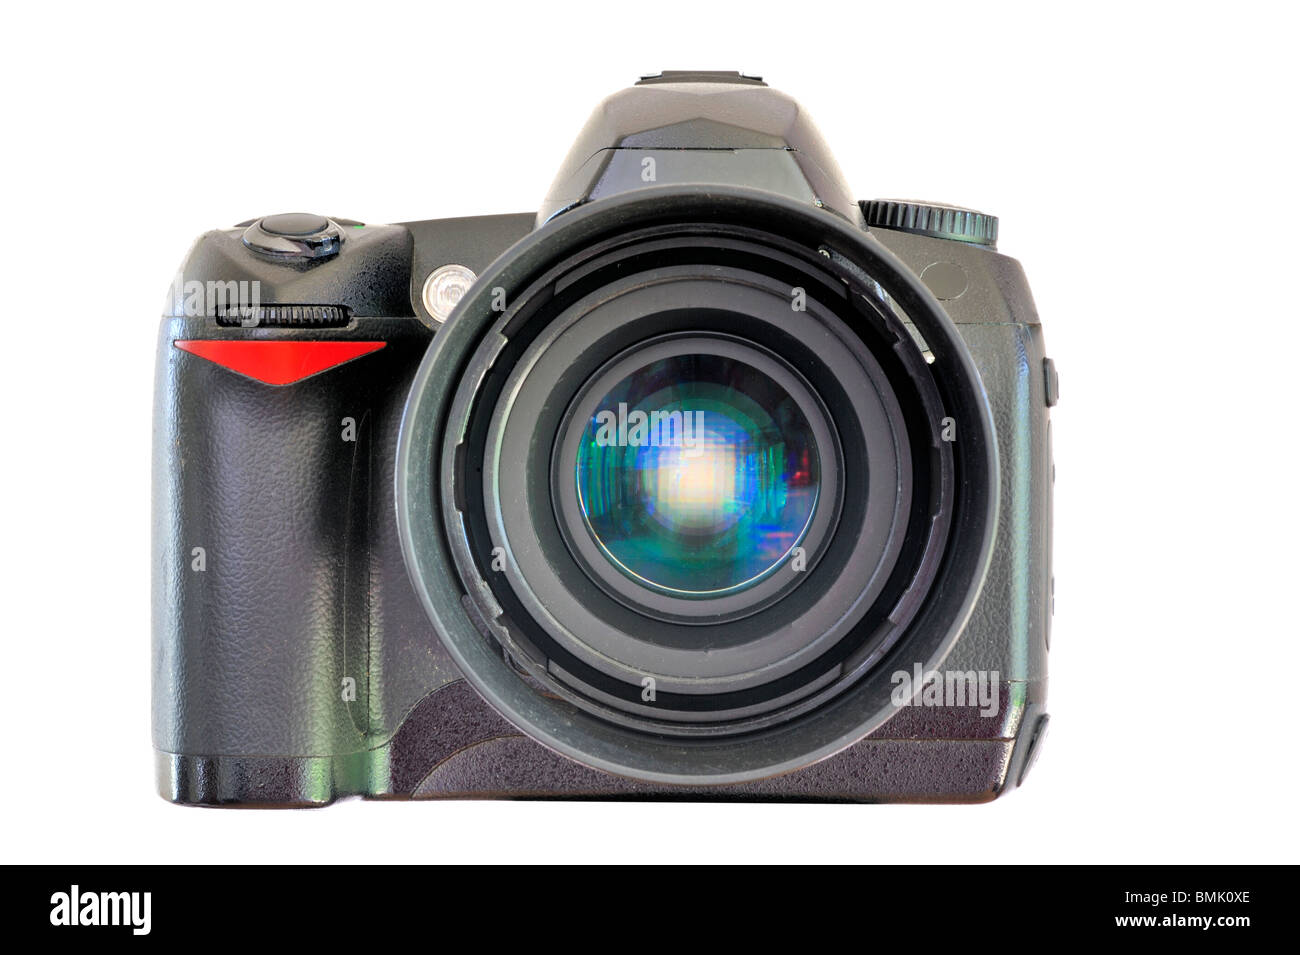 Front view of a digital single lens reflex camera (DSLR) Stock Photo